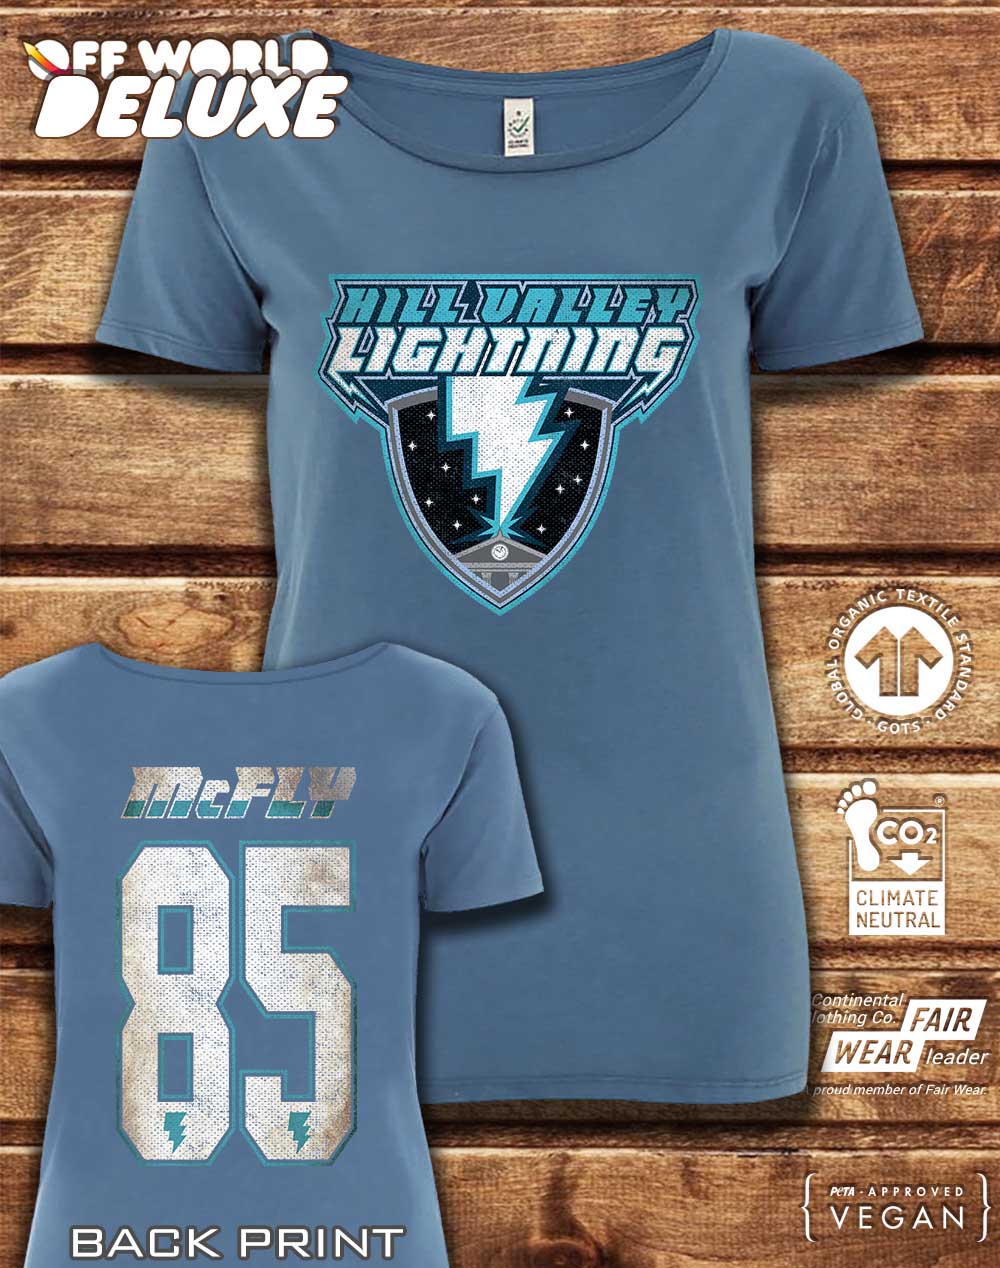 DELUXE Hill Valley Lightning Organic Scoop Neck T-Shirt